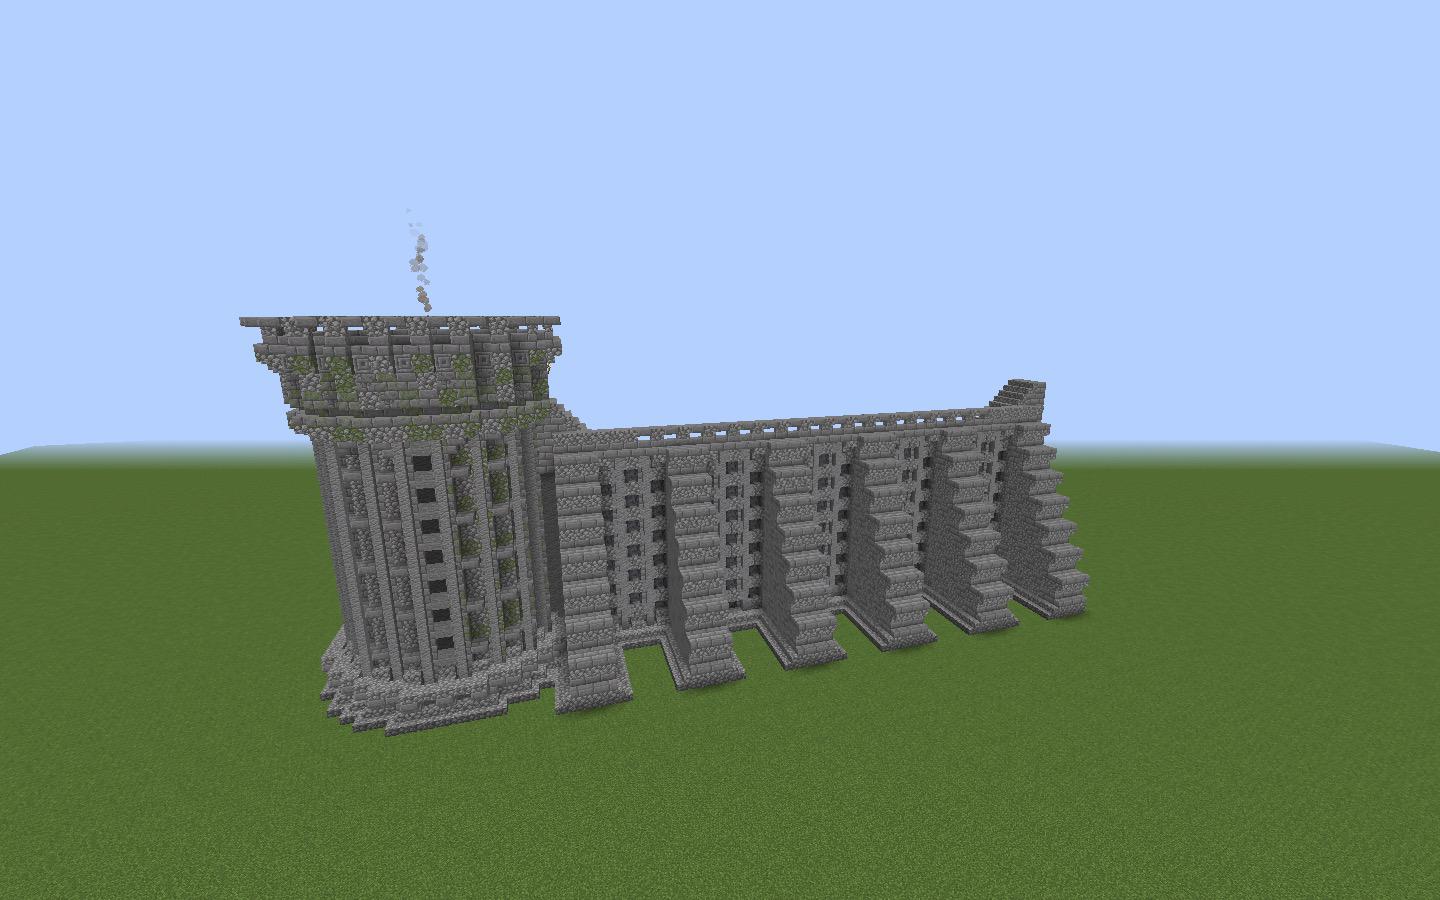 minecraft castle wall design